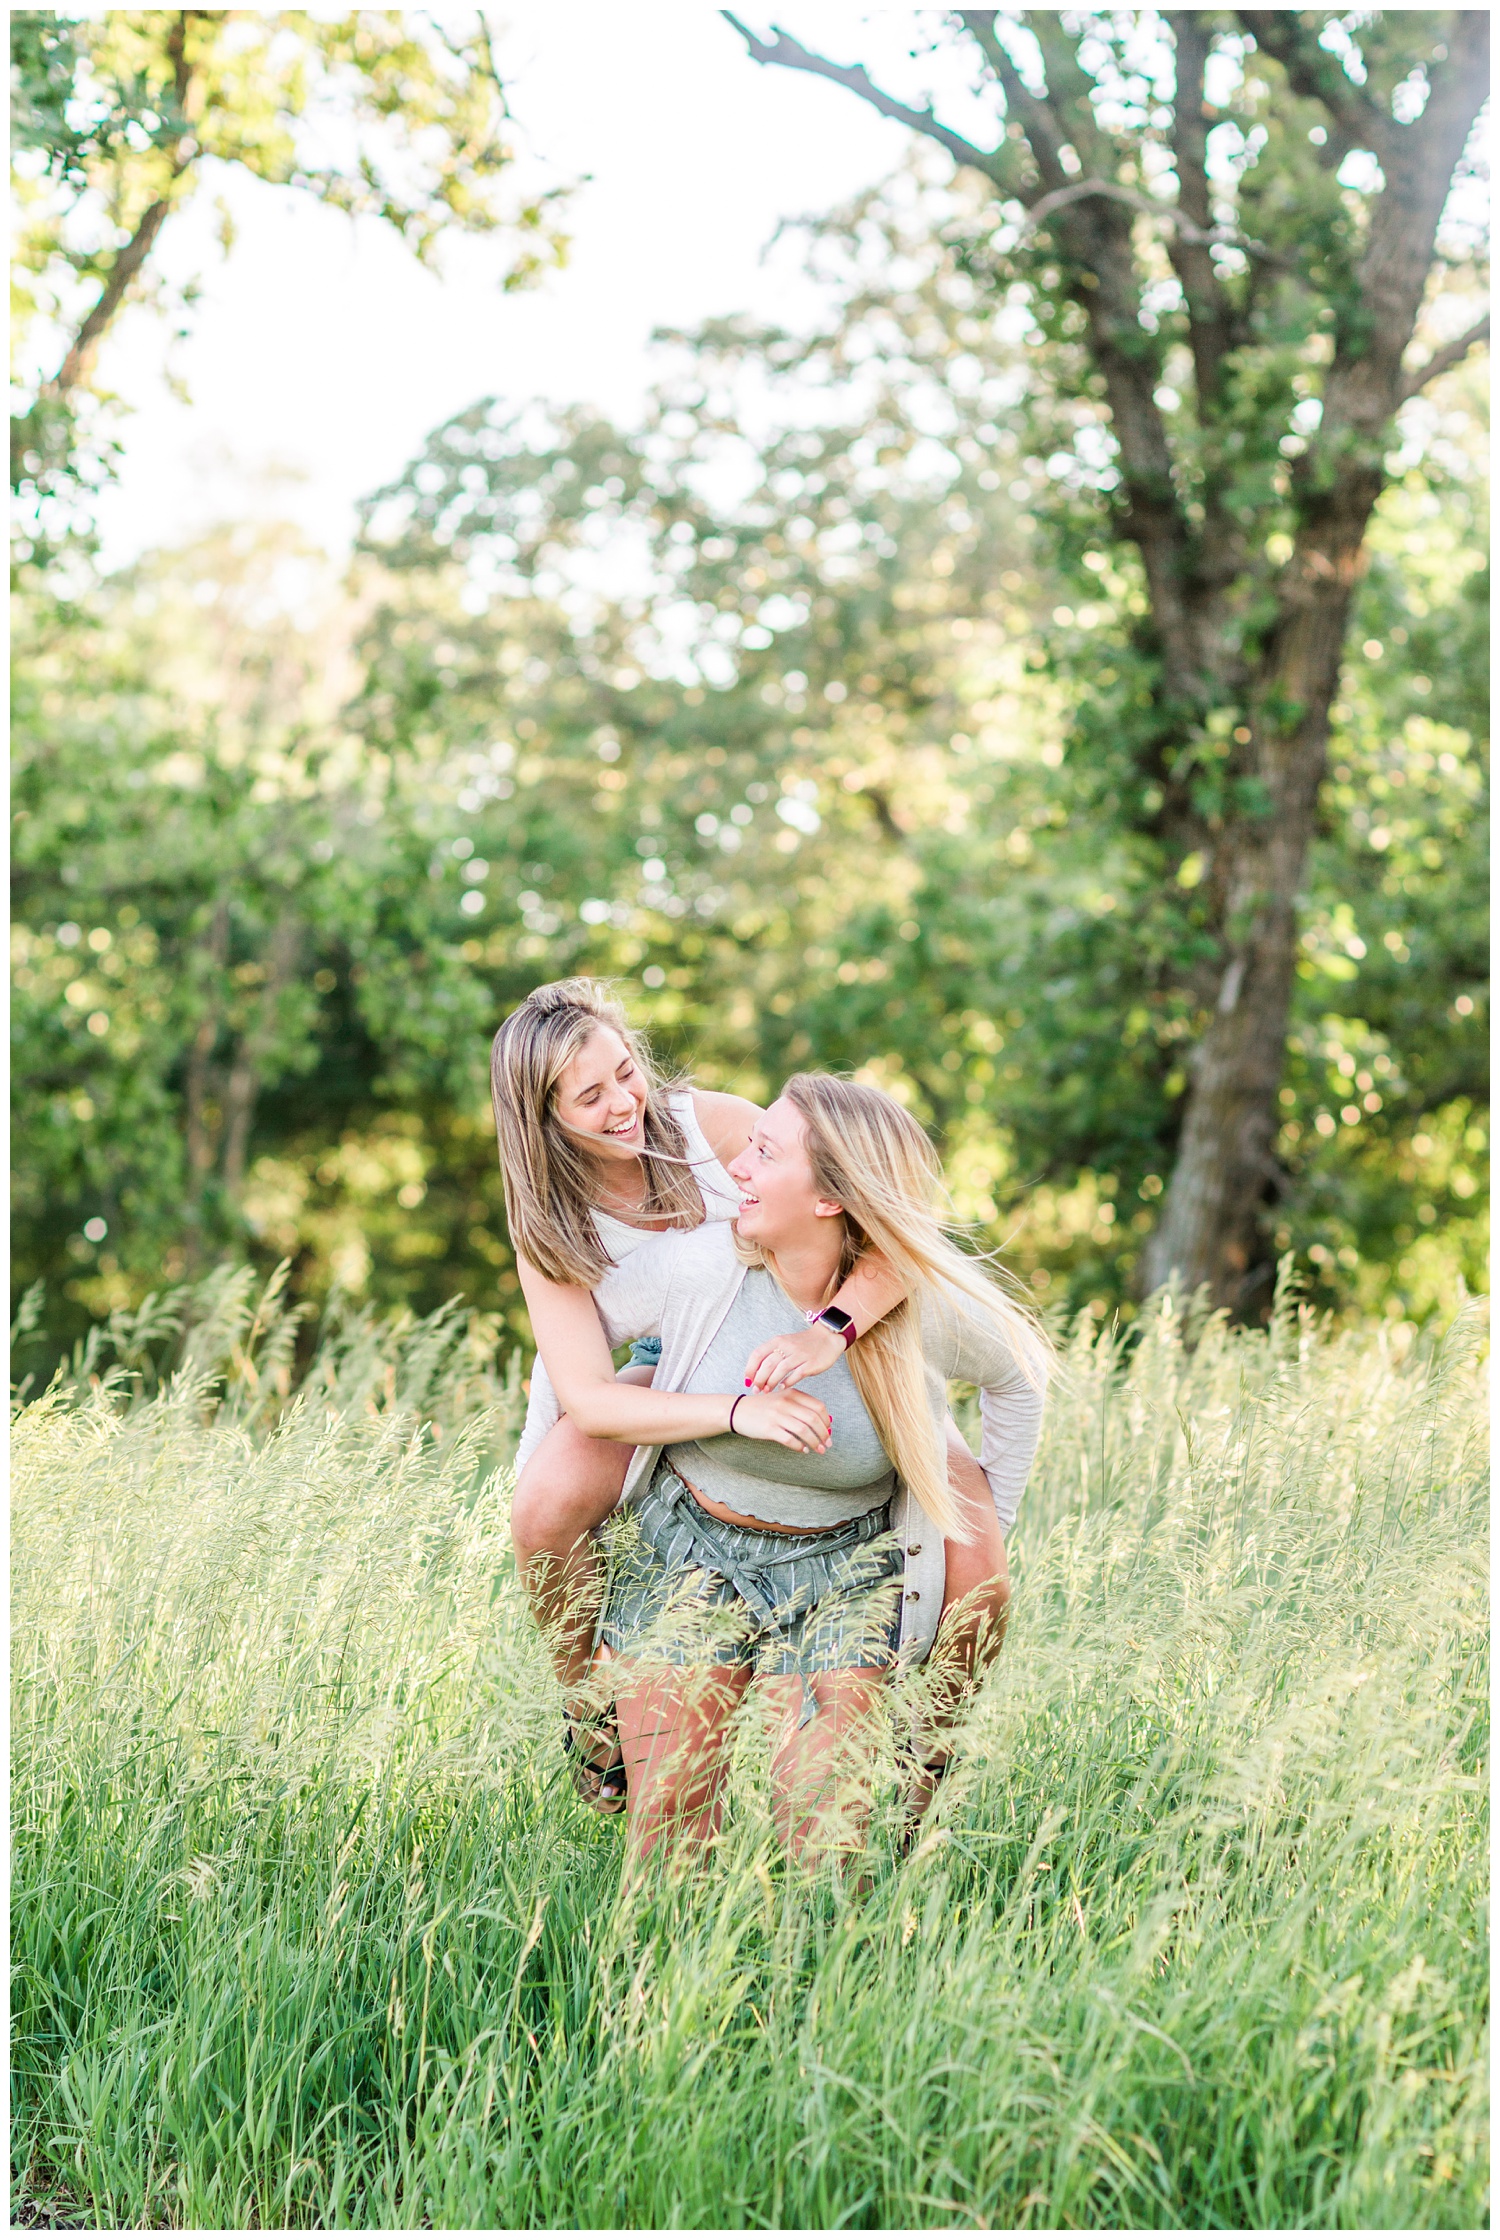 Senior girls best friends BFFs piggy back while laughing in a grassy field on a rural Iowa farm | CB Studio